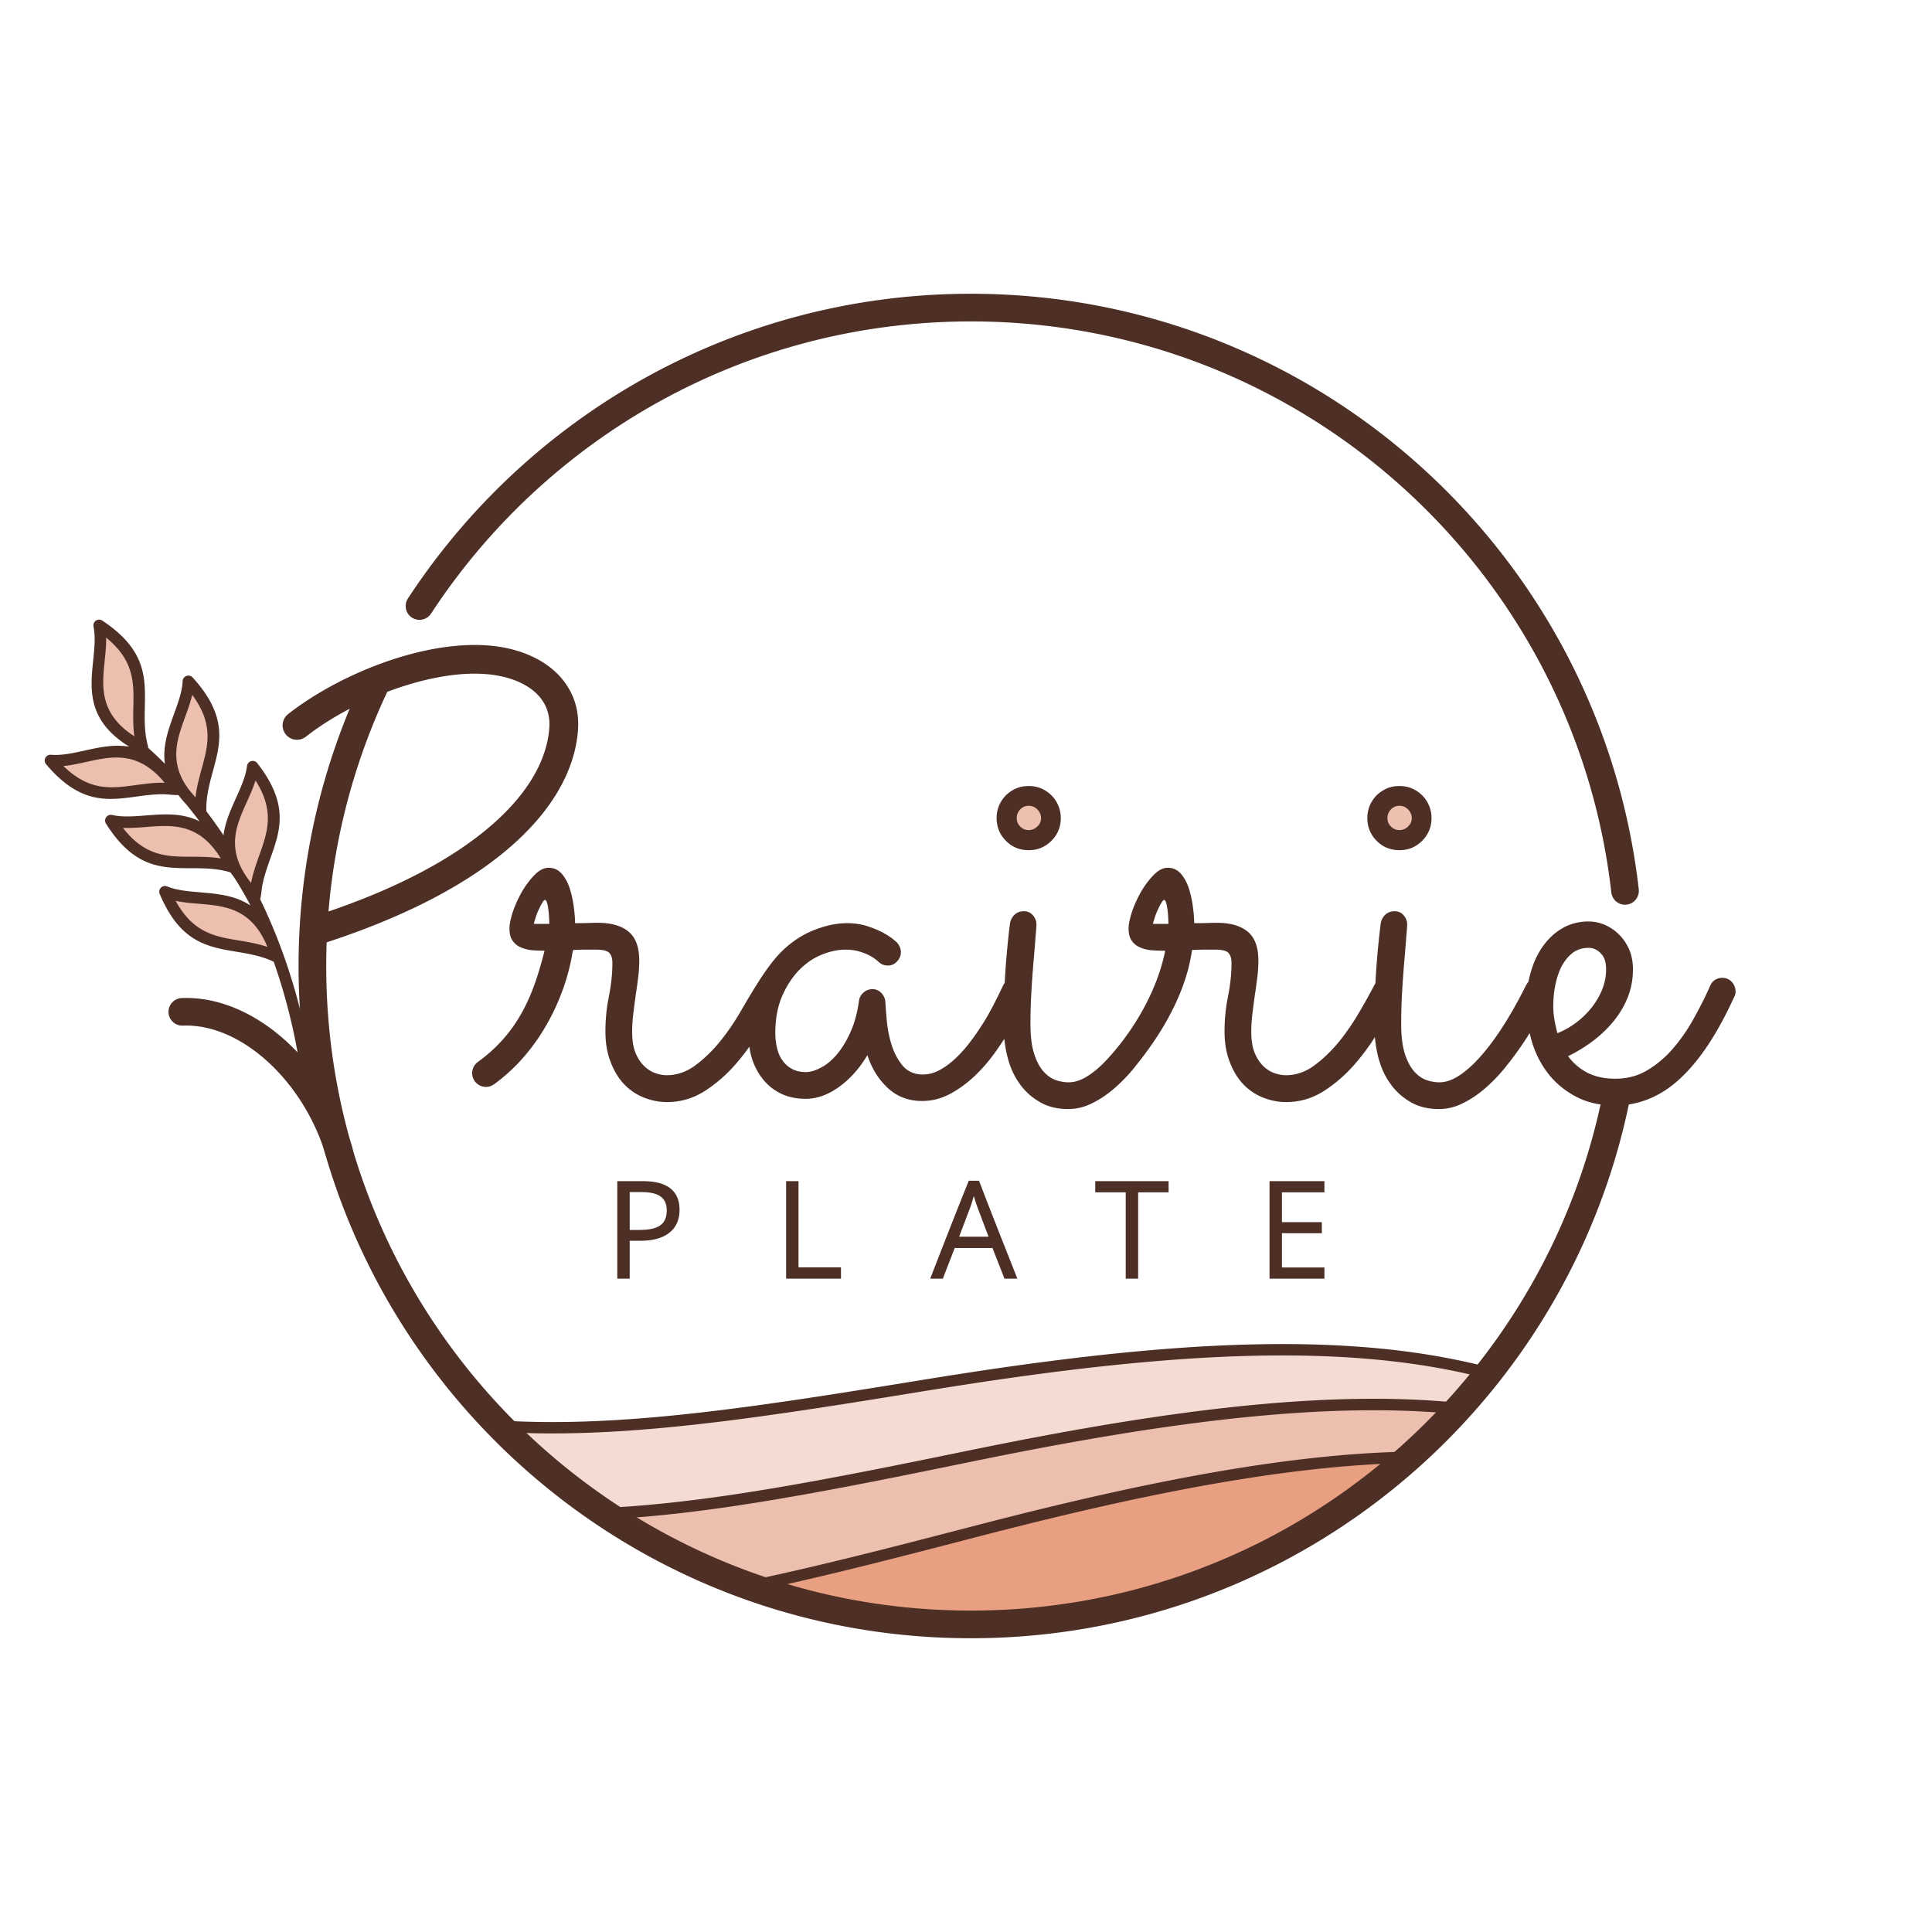 PrairiePlate Square Logo 512 x 512 px